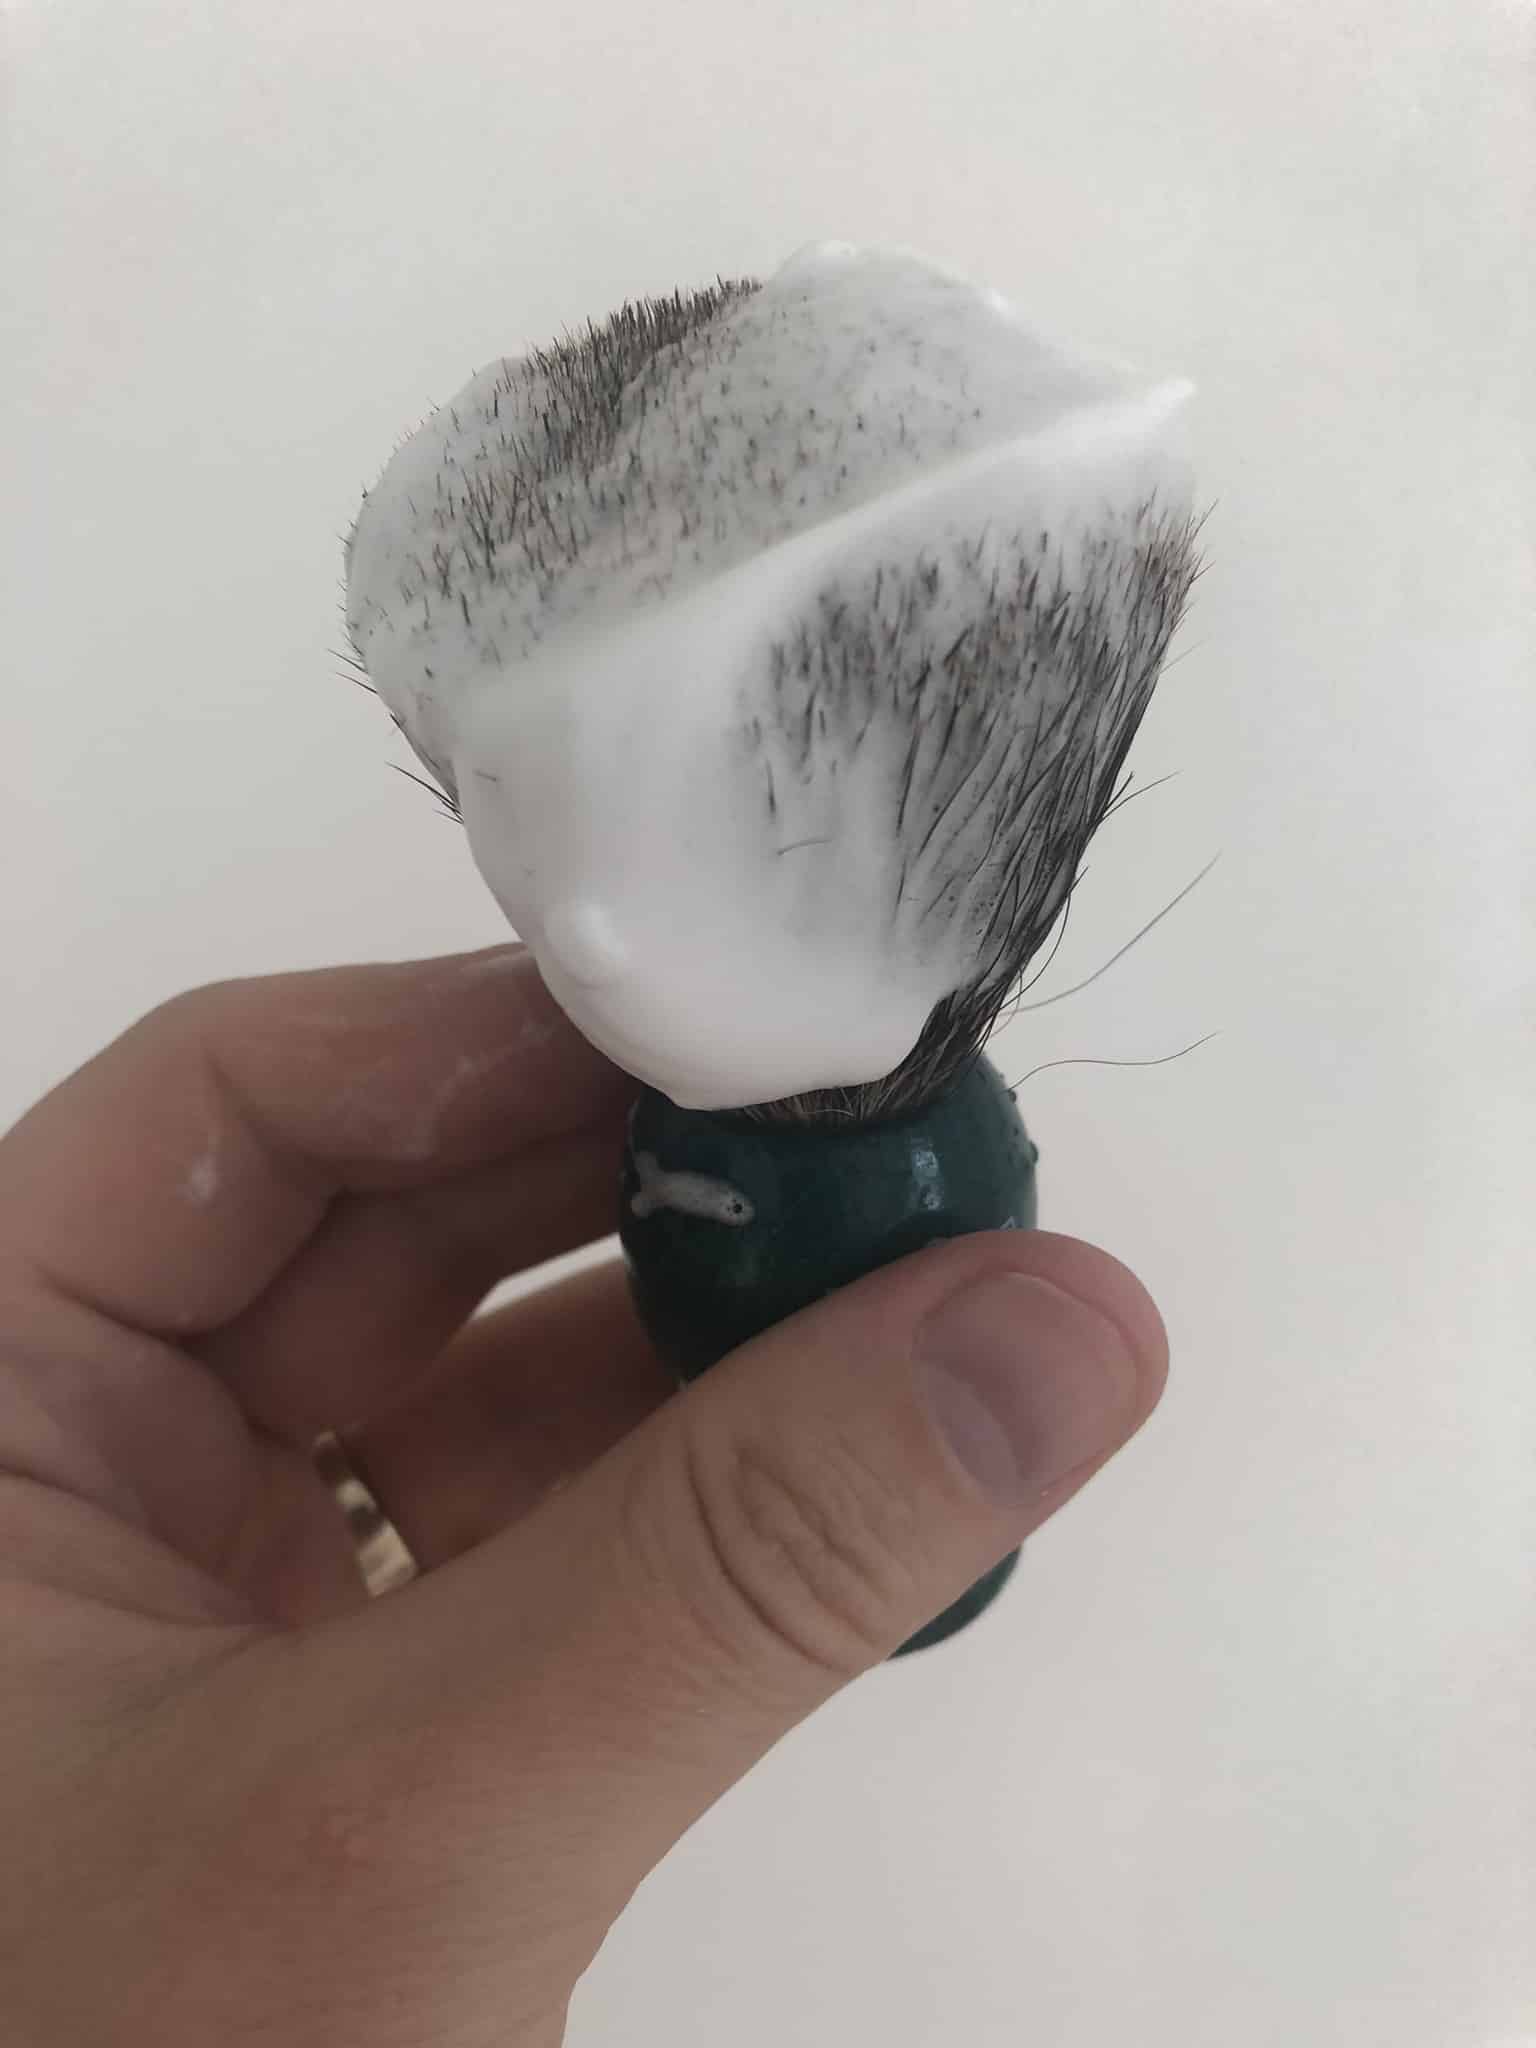 RazoRock Shaving Soap Lather on My Shaving Brush